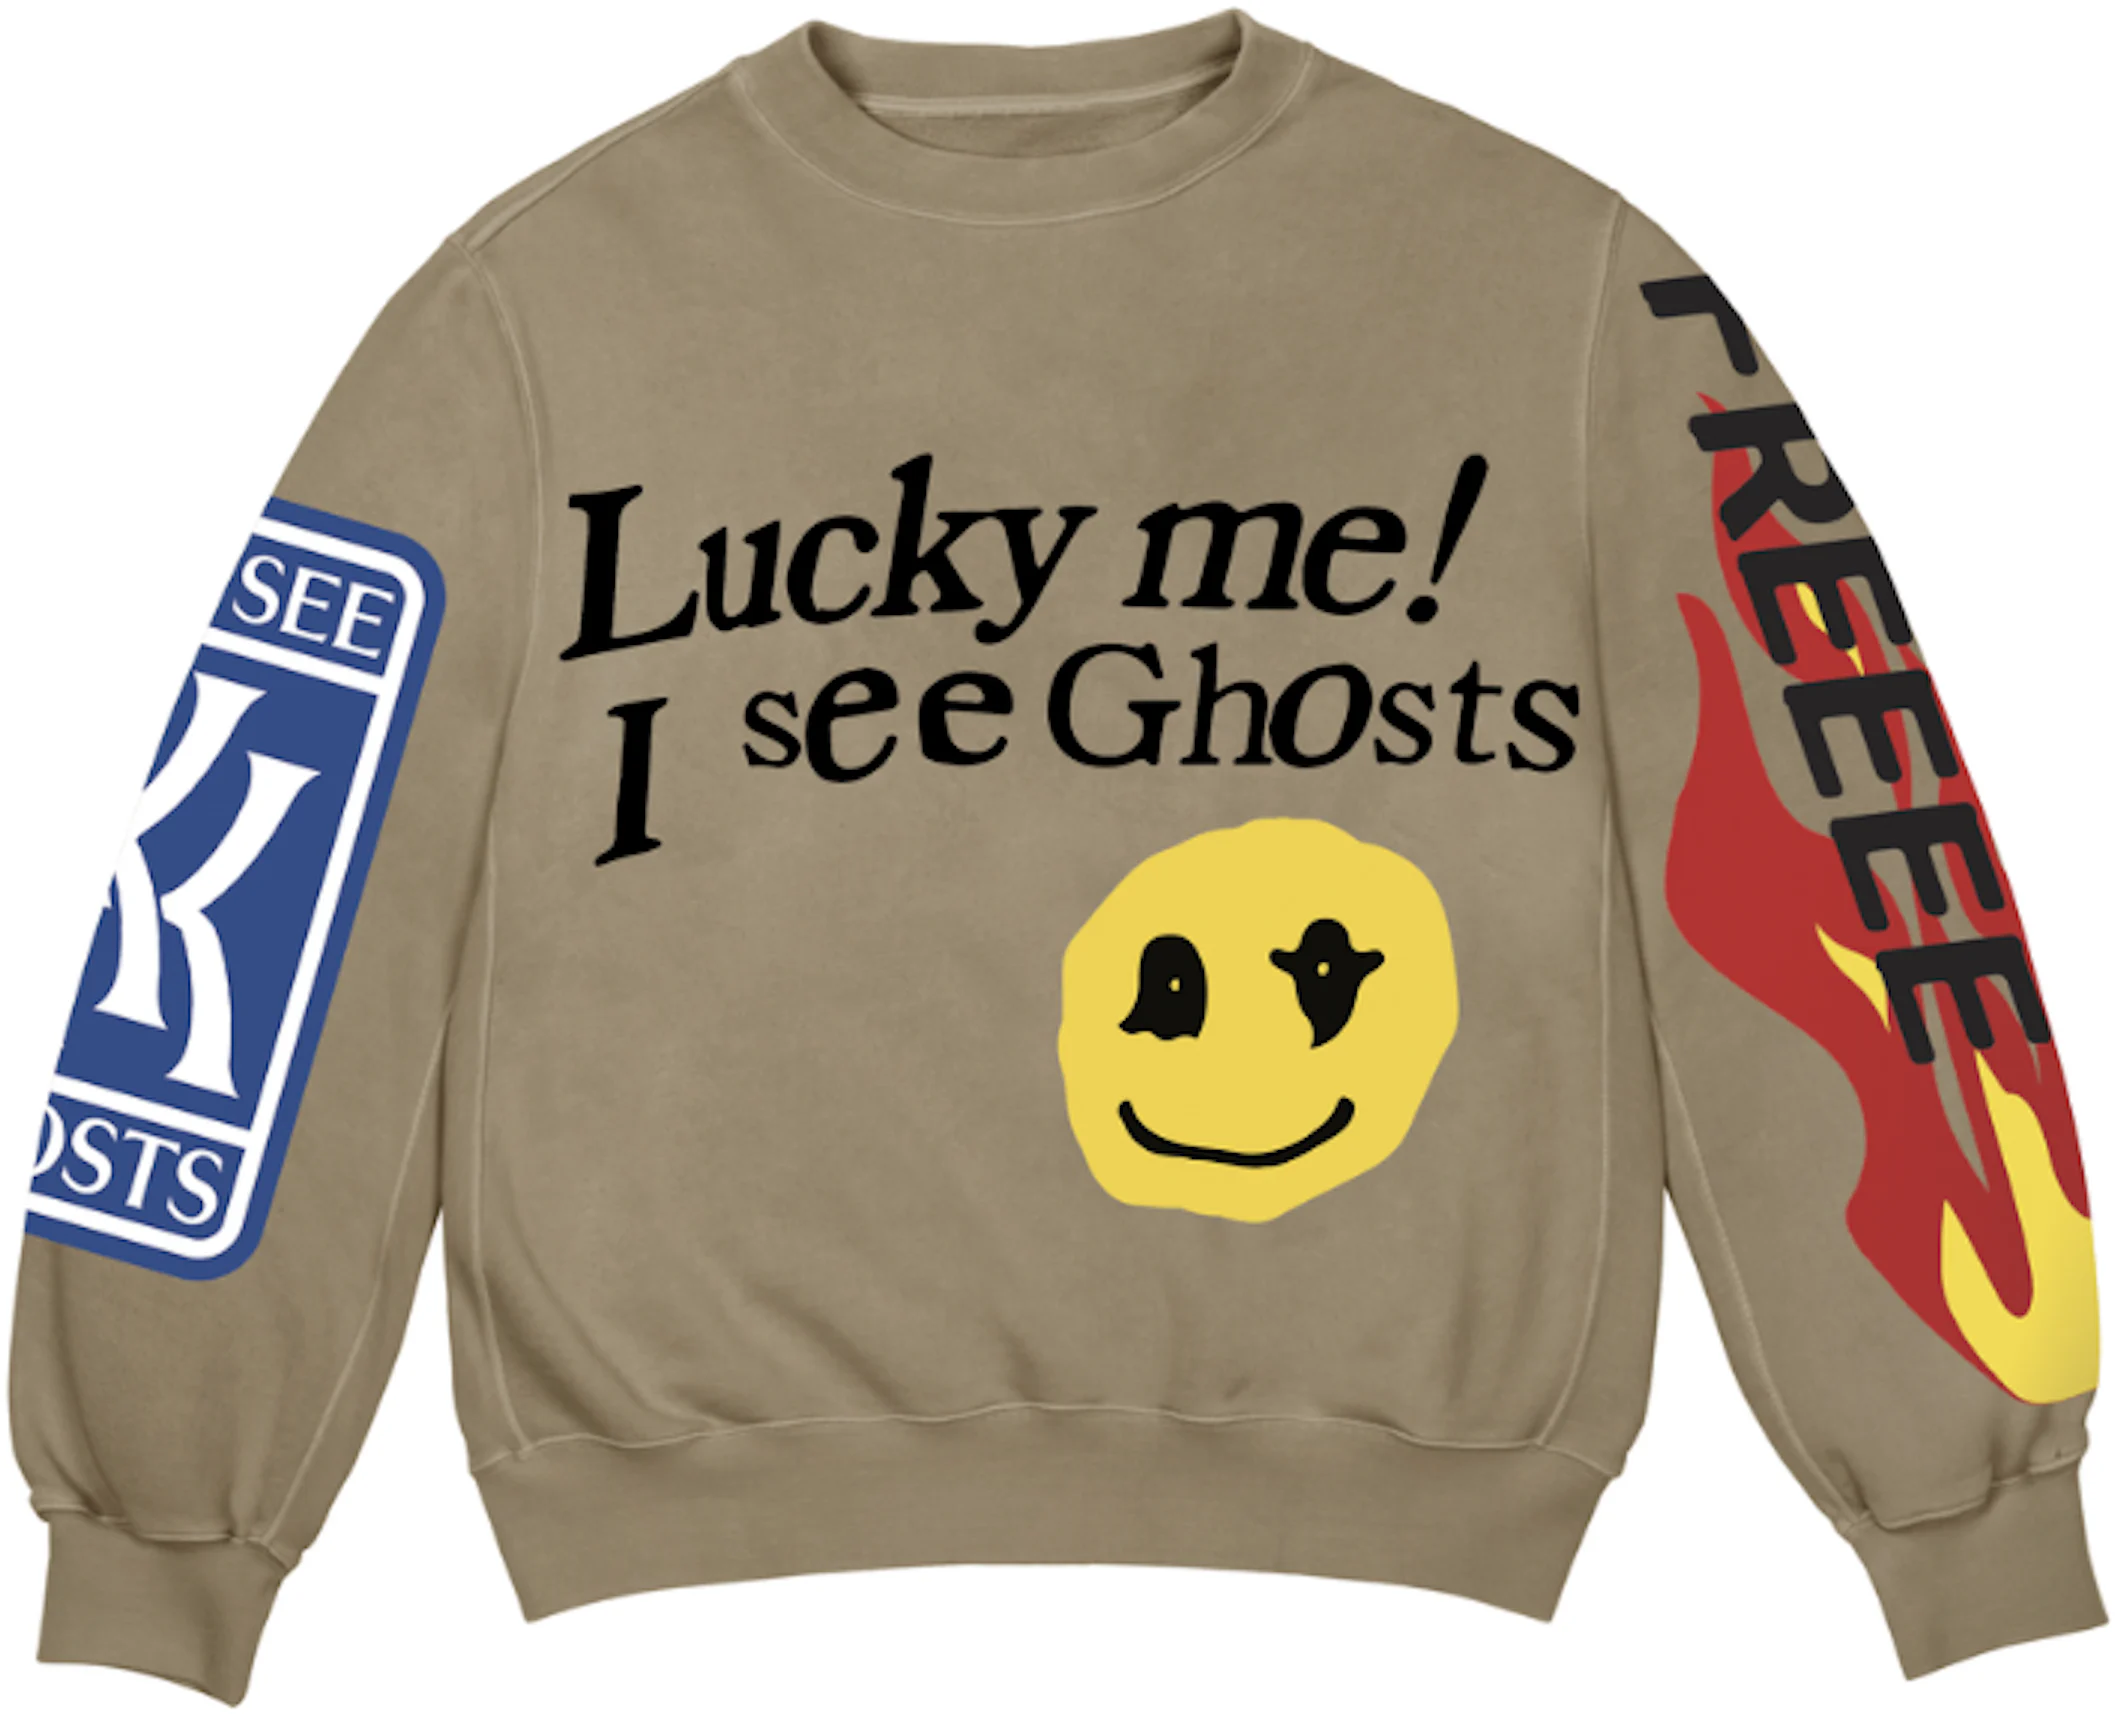 Buy Artist Merch Kids See Ghosts Streetwear - StockX